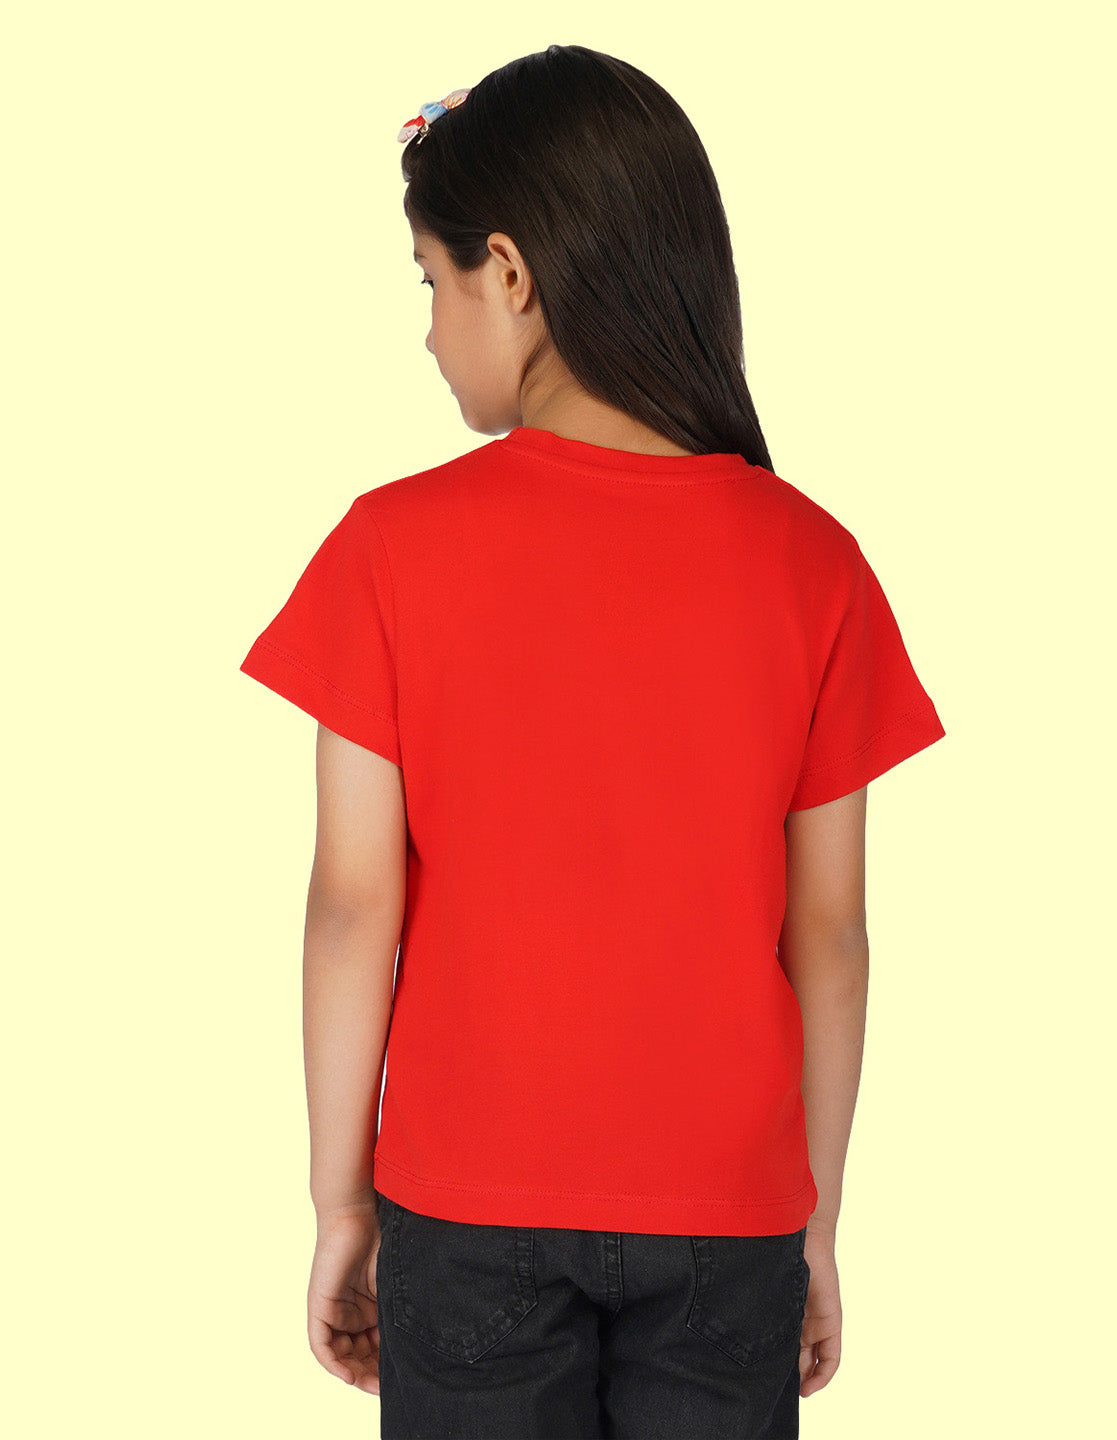 Nusyl Girls Half Sleeves Red Mummy's little cutie printed T-shirt